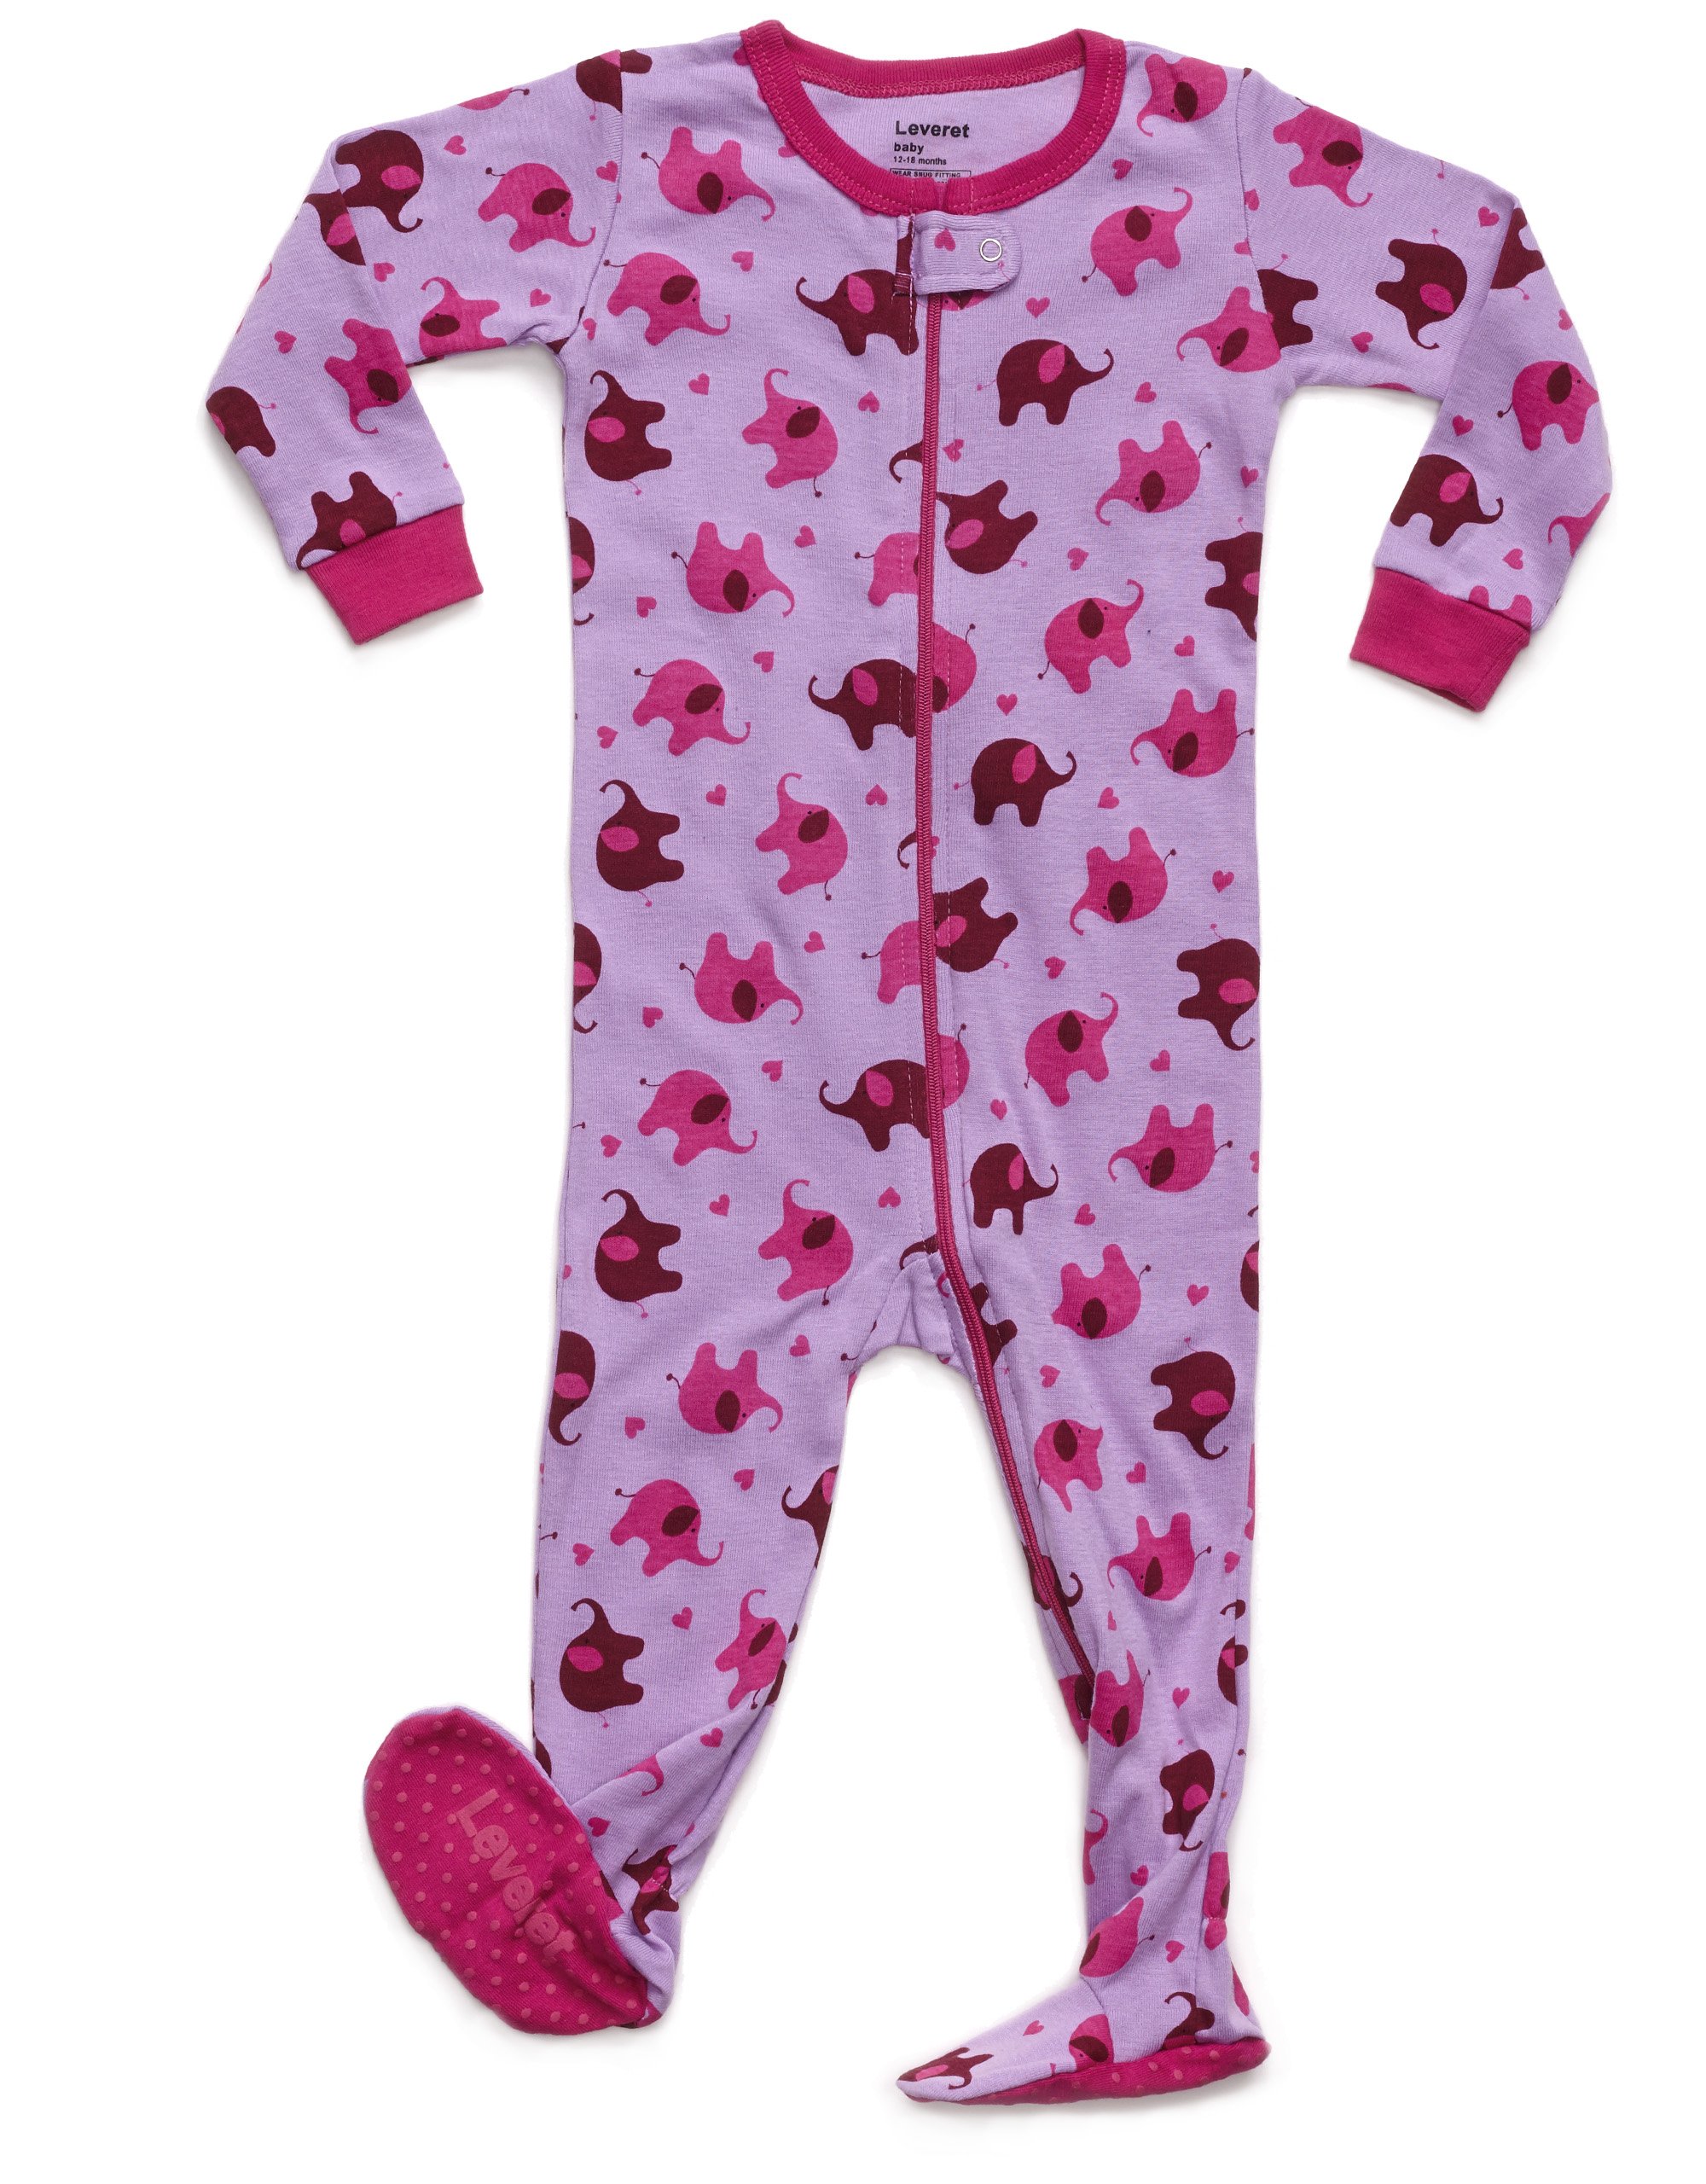 Leveret Kids /& Toddler Boys Girls Footed Pajamas 100/% Cotton Rhino Size 4 Years